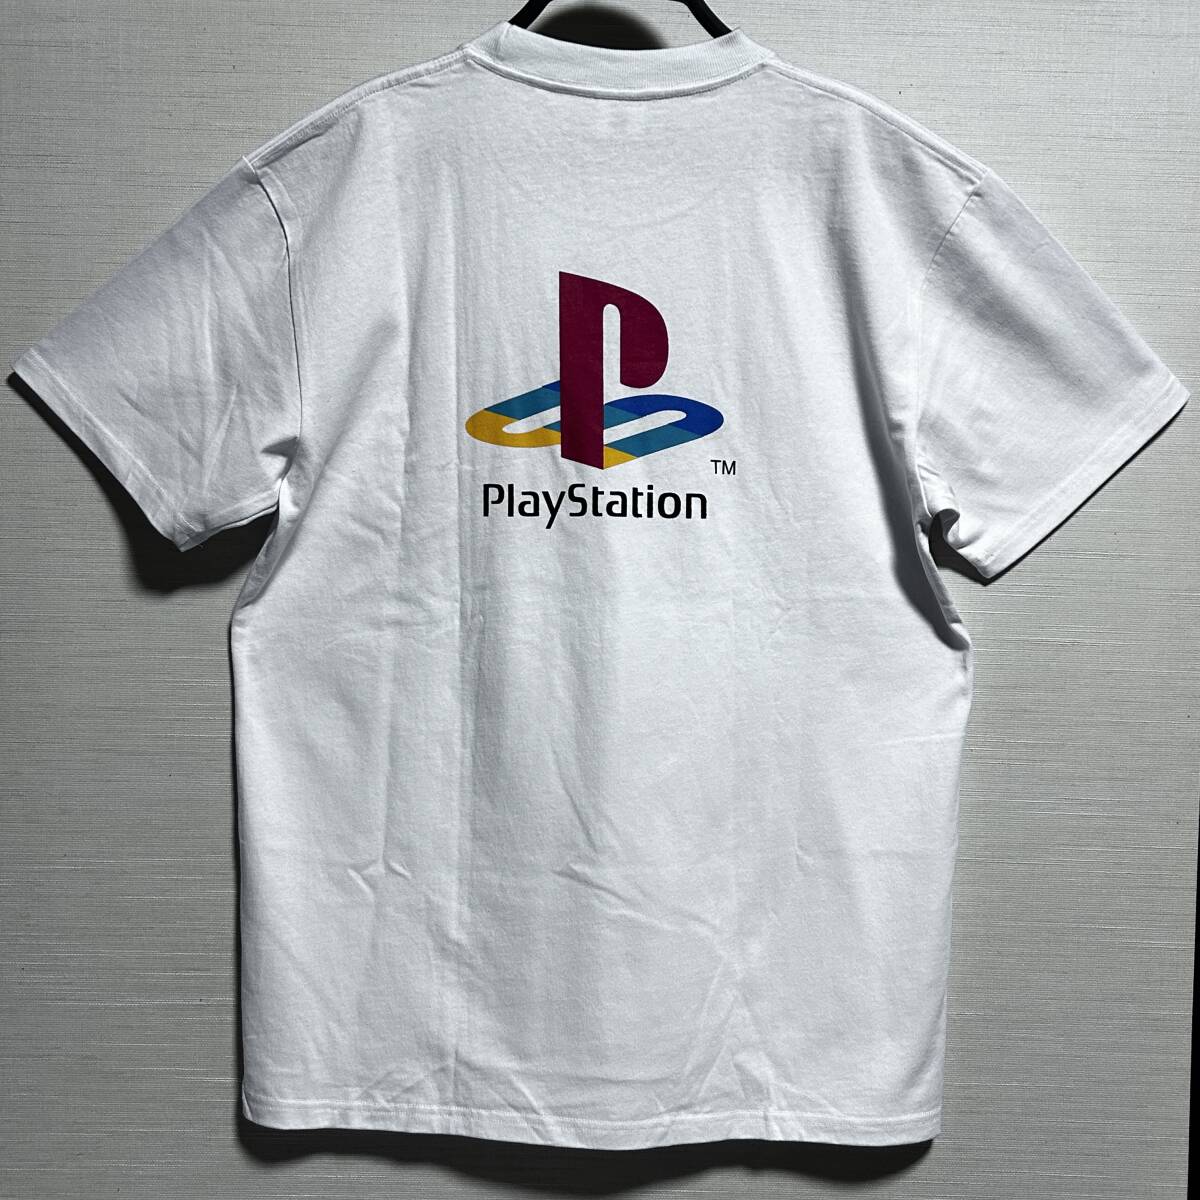 ※ SONY PlayStation(プレイステーション) MEN ロゴ Tシャツ 白色 LLサイズ プレステ ファミリーマーク バックプリント (タグ付き未使用品)_画像1